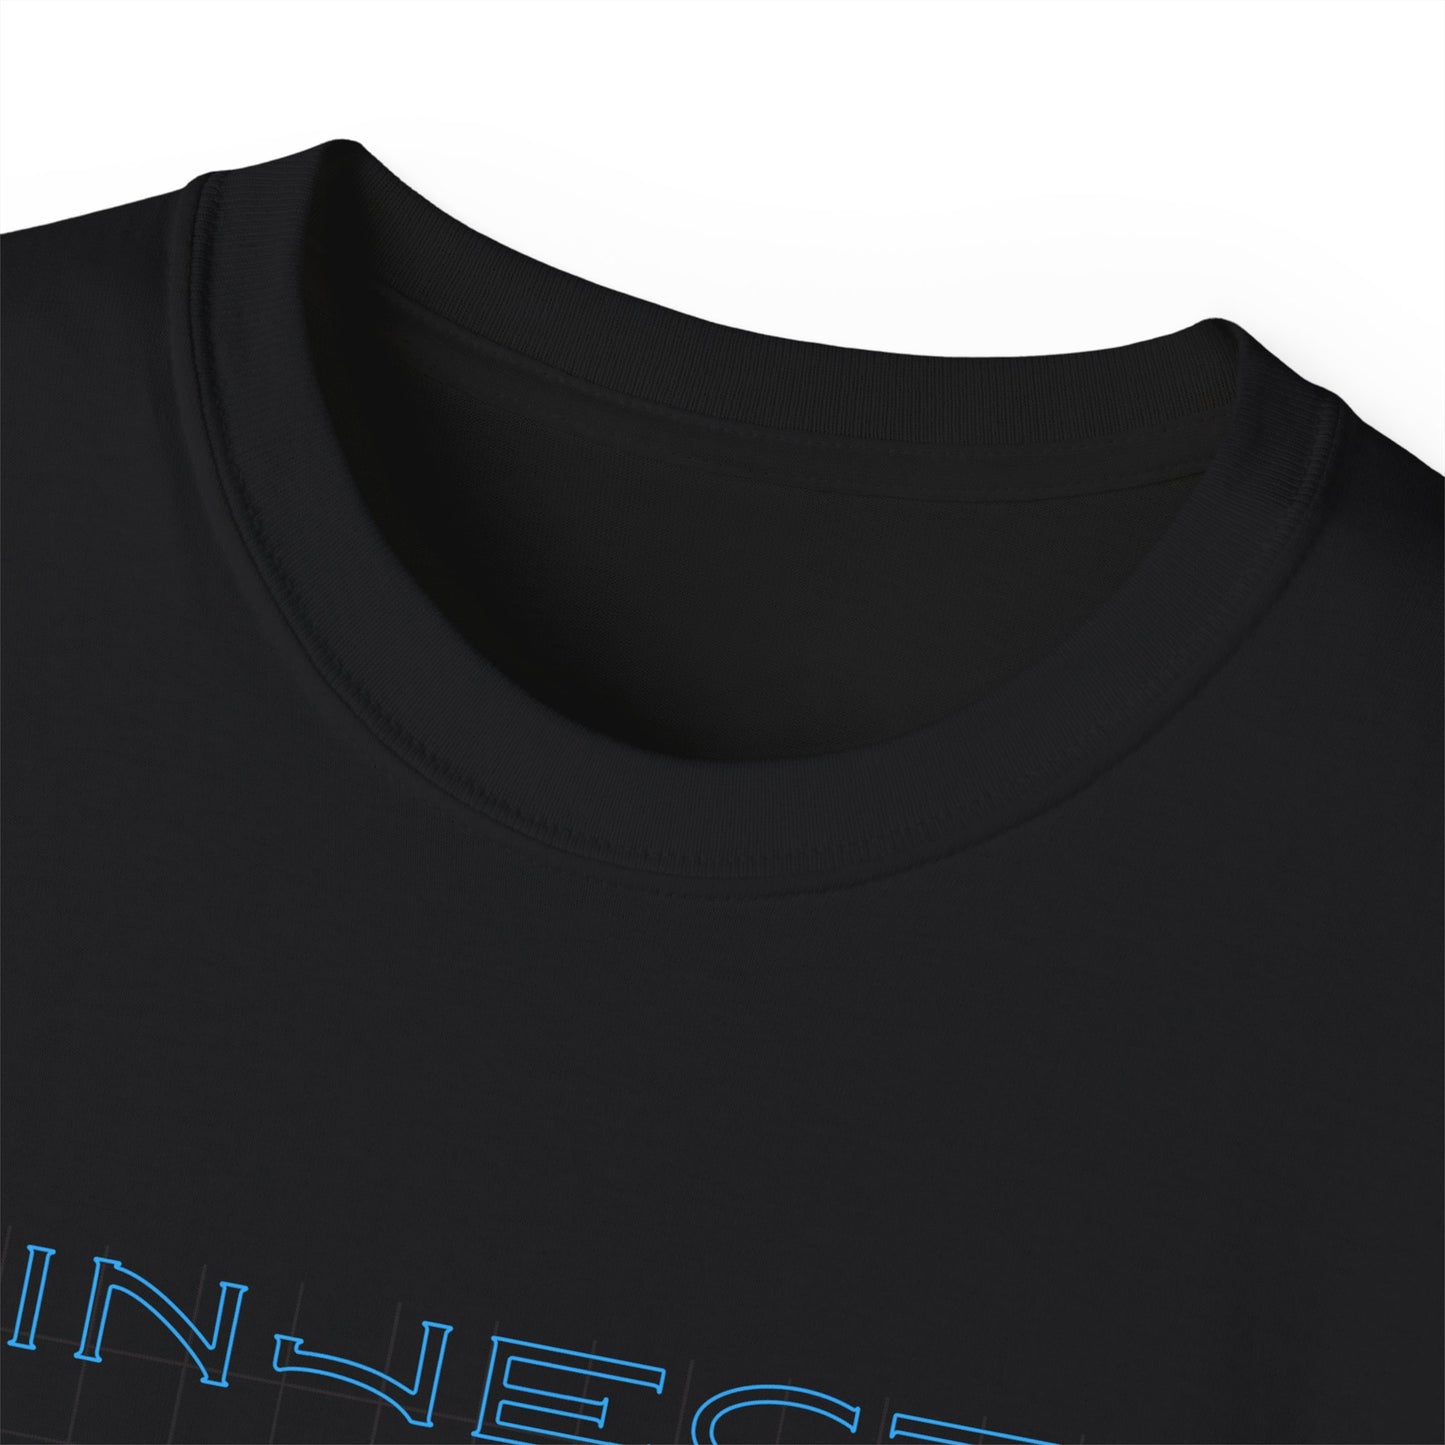 Unisex Ultra Cotton Injective T-shirt